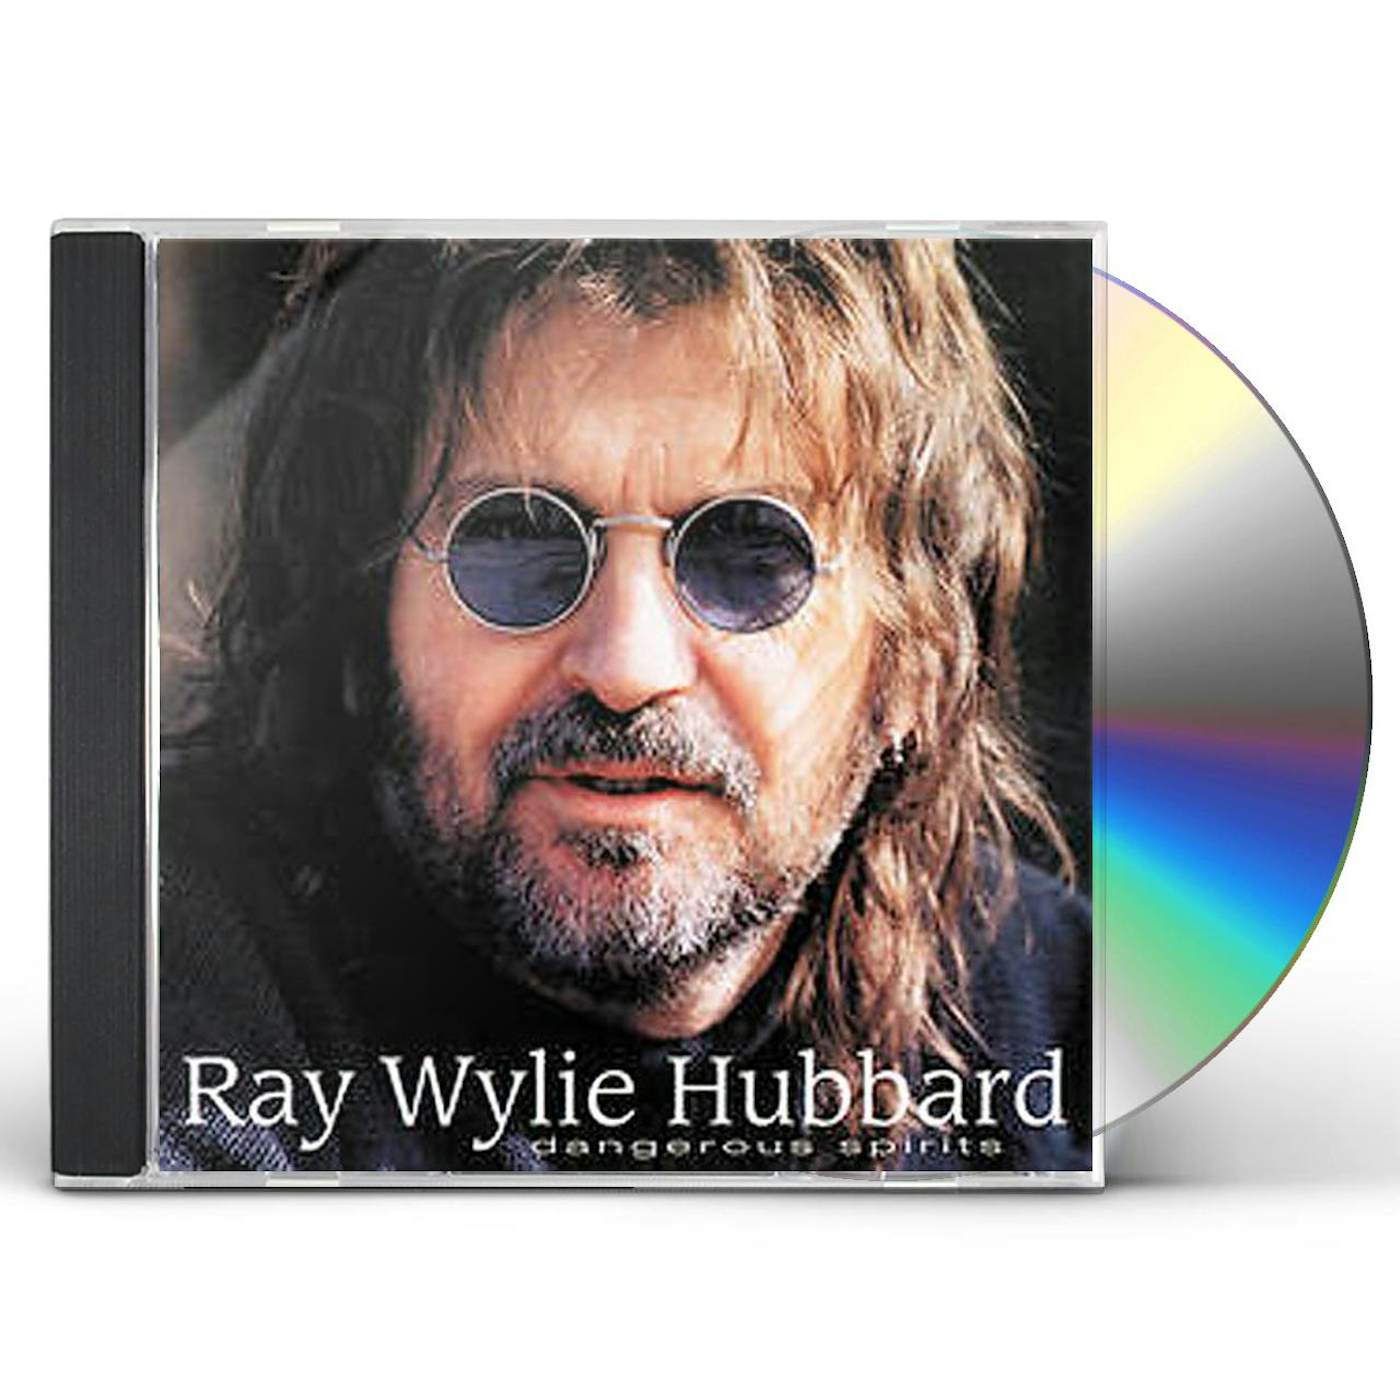 Ray Wylie Hubbard DANGEROUS SPIRITS CD